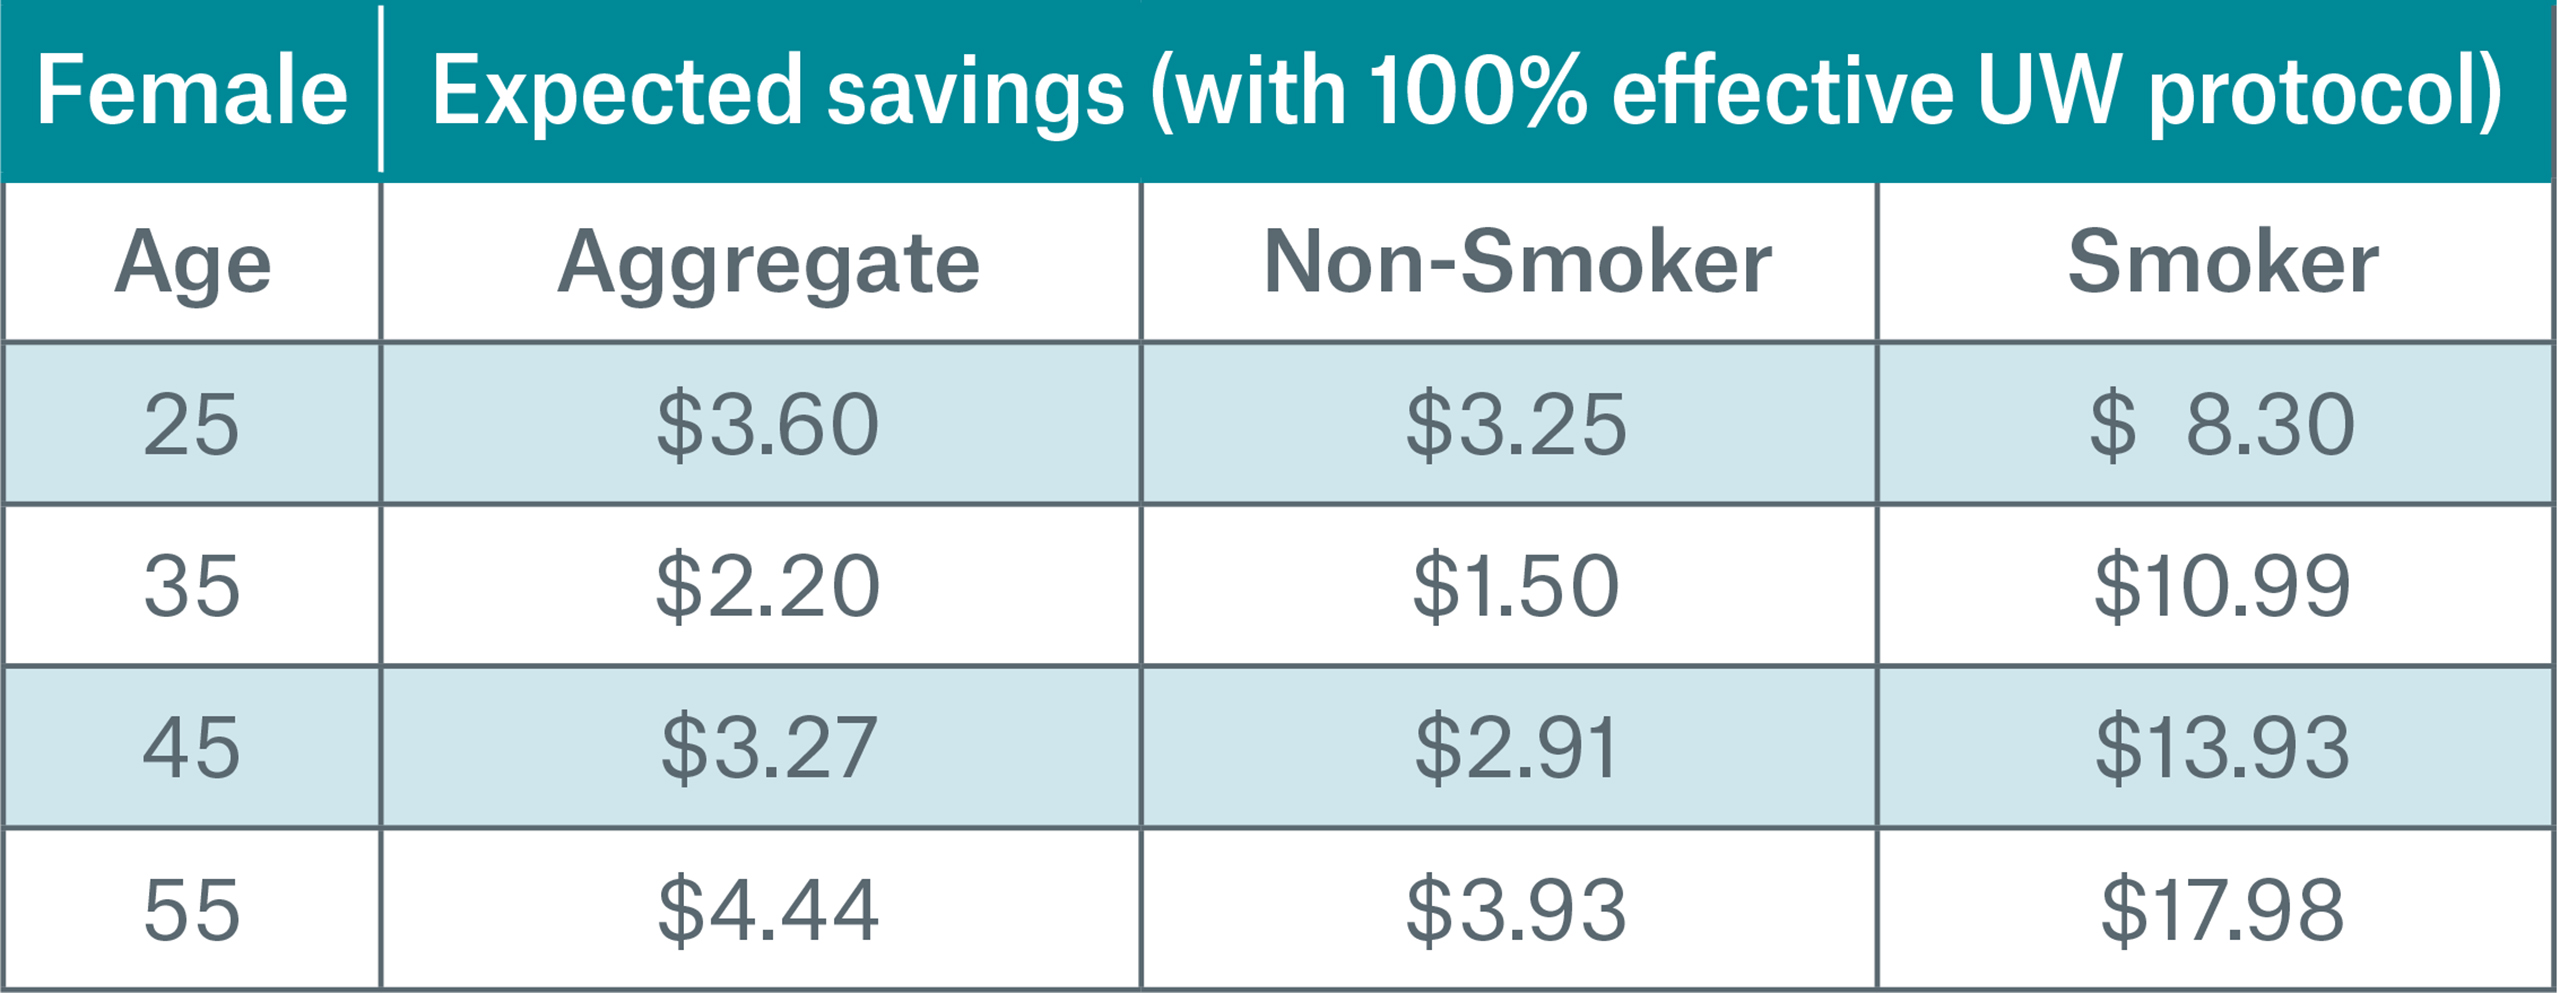 Table-4_female expected savings, aggregate,non-smoker,smoker.jpg